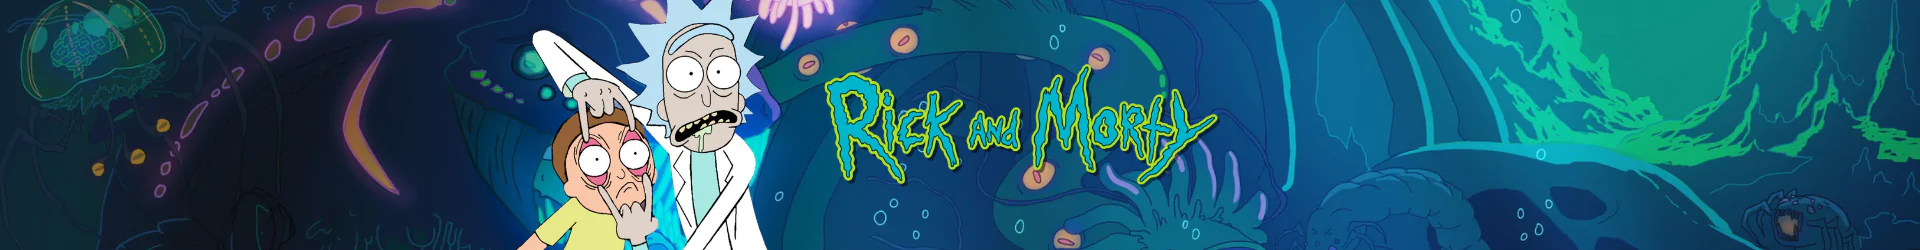 Rick and Morty karten banner